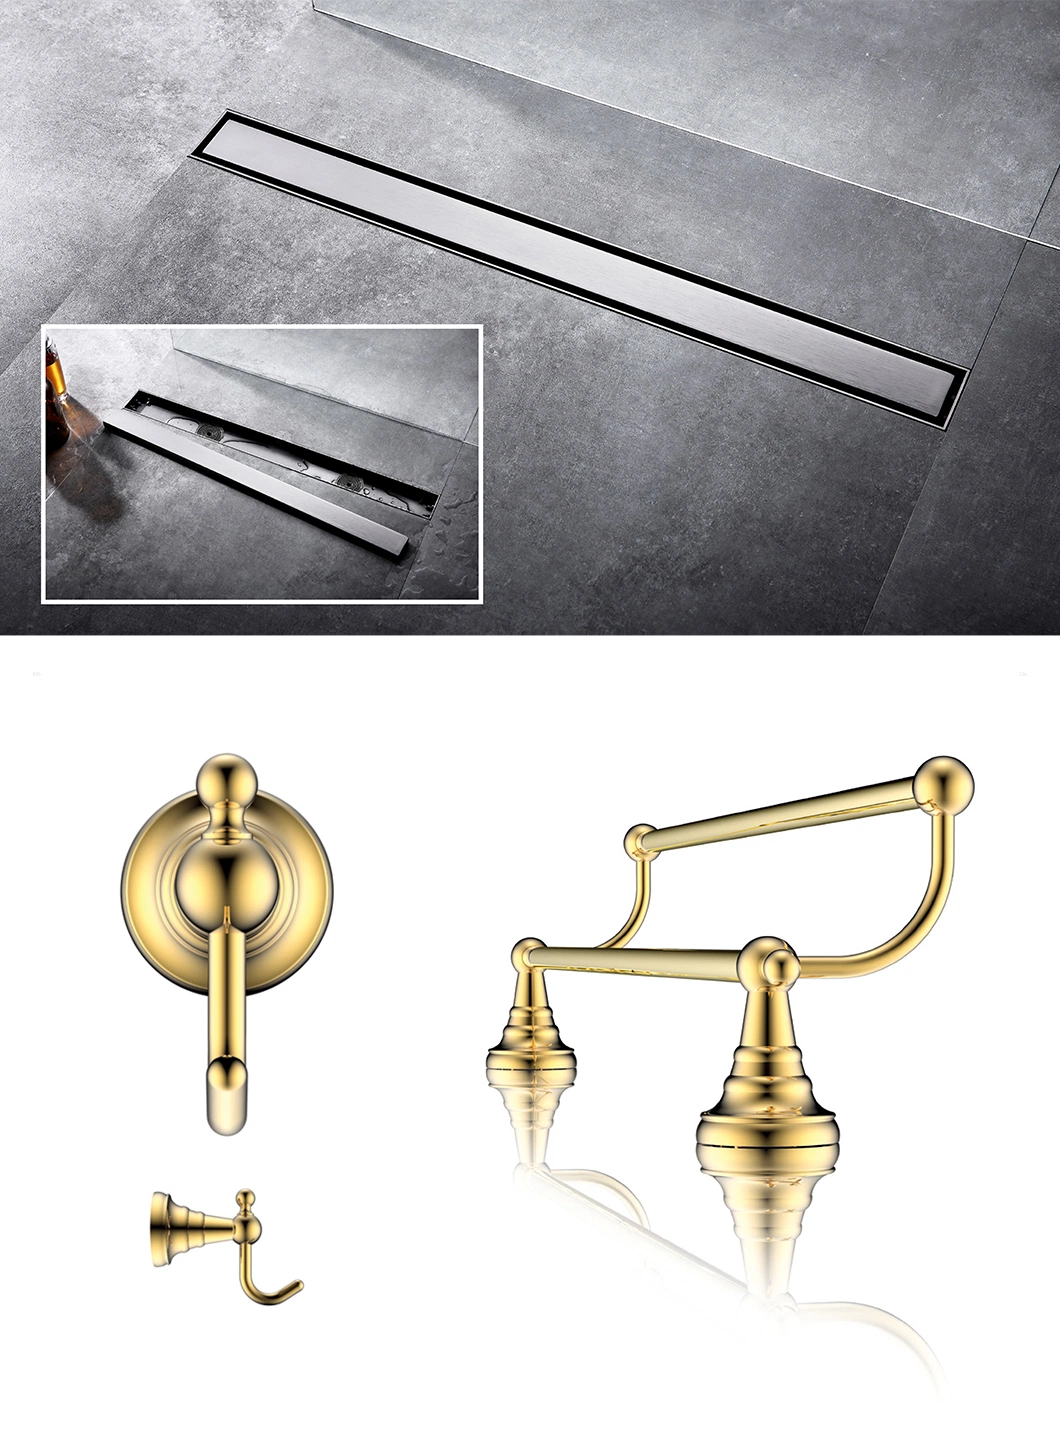 Ablinox Factory Wall Mounted Stainless Steel 304 Bathtub Handrail Polished Bathroom Accessories